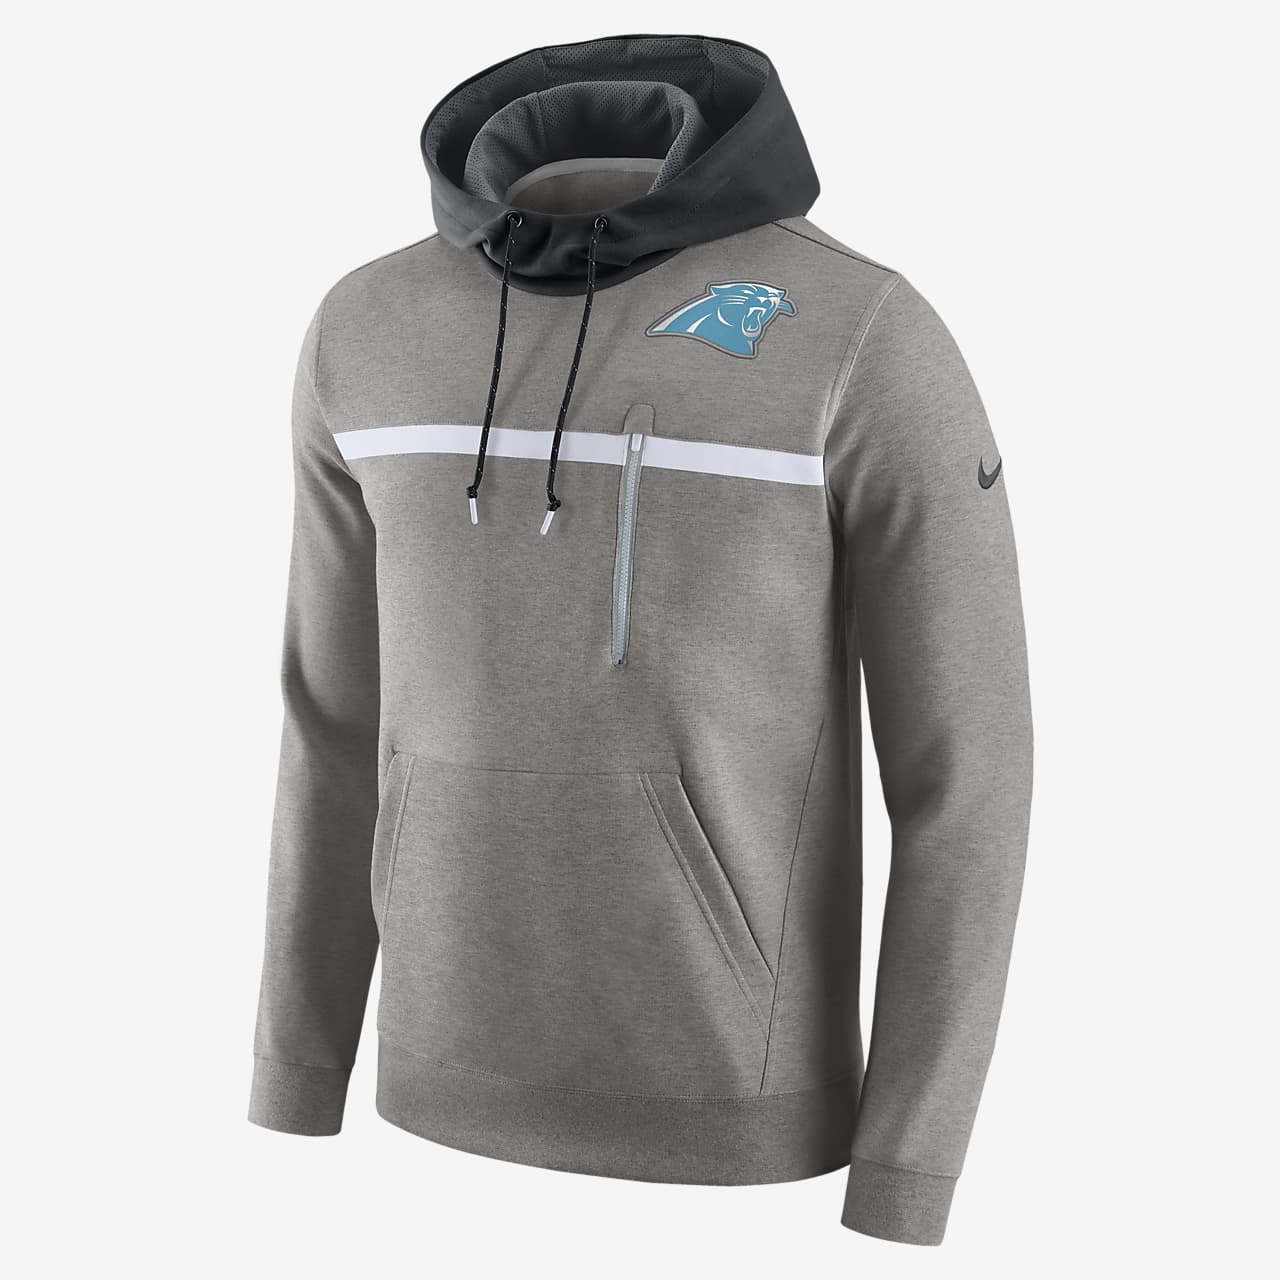 Nike Championship Drive Sweatshirt (NFL Panthers) Men's Hoodie